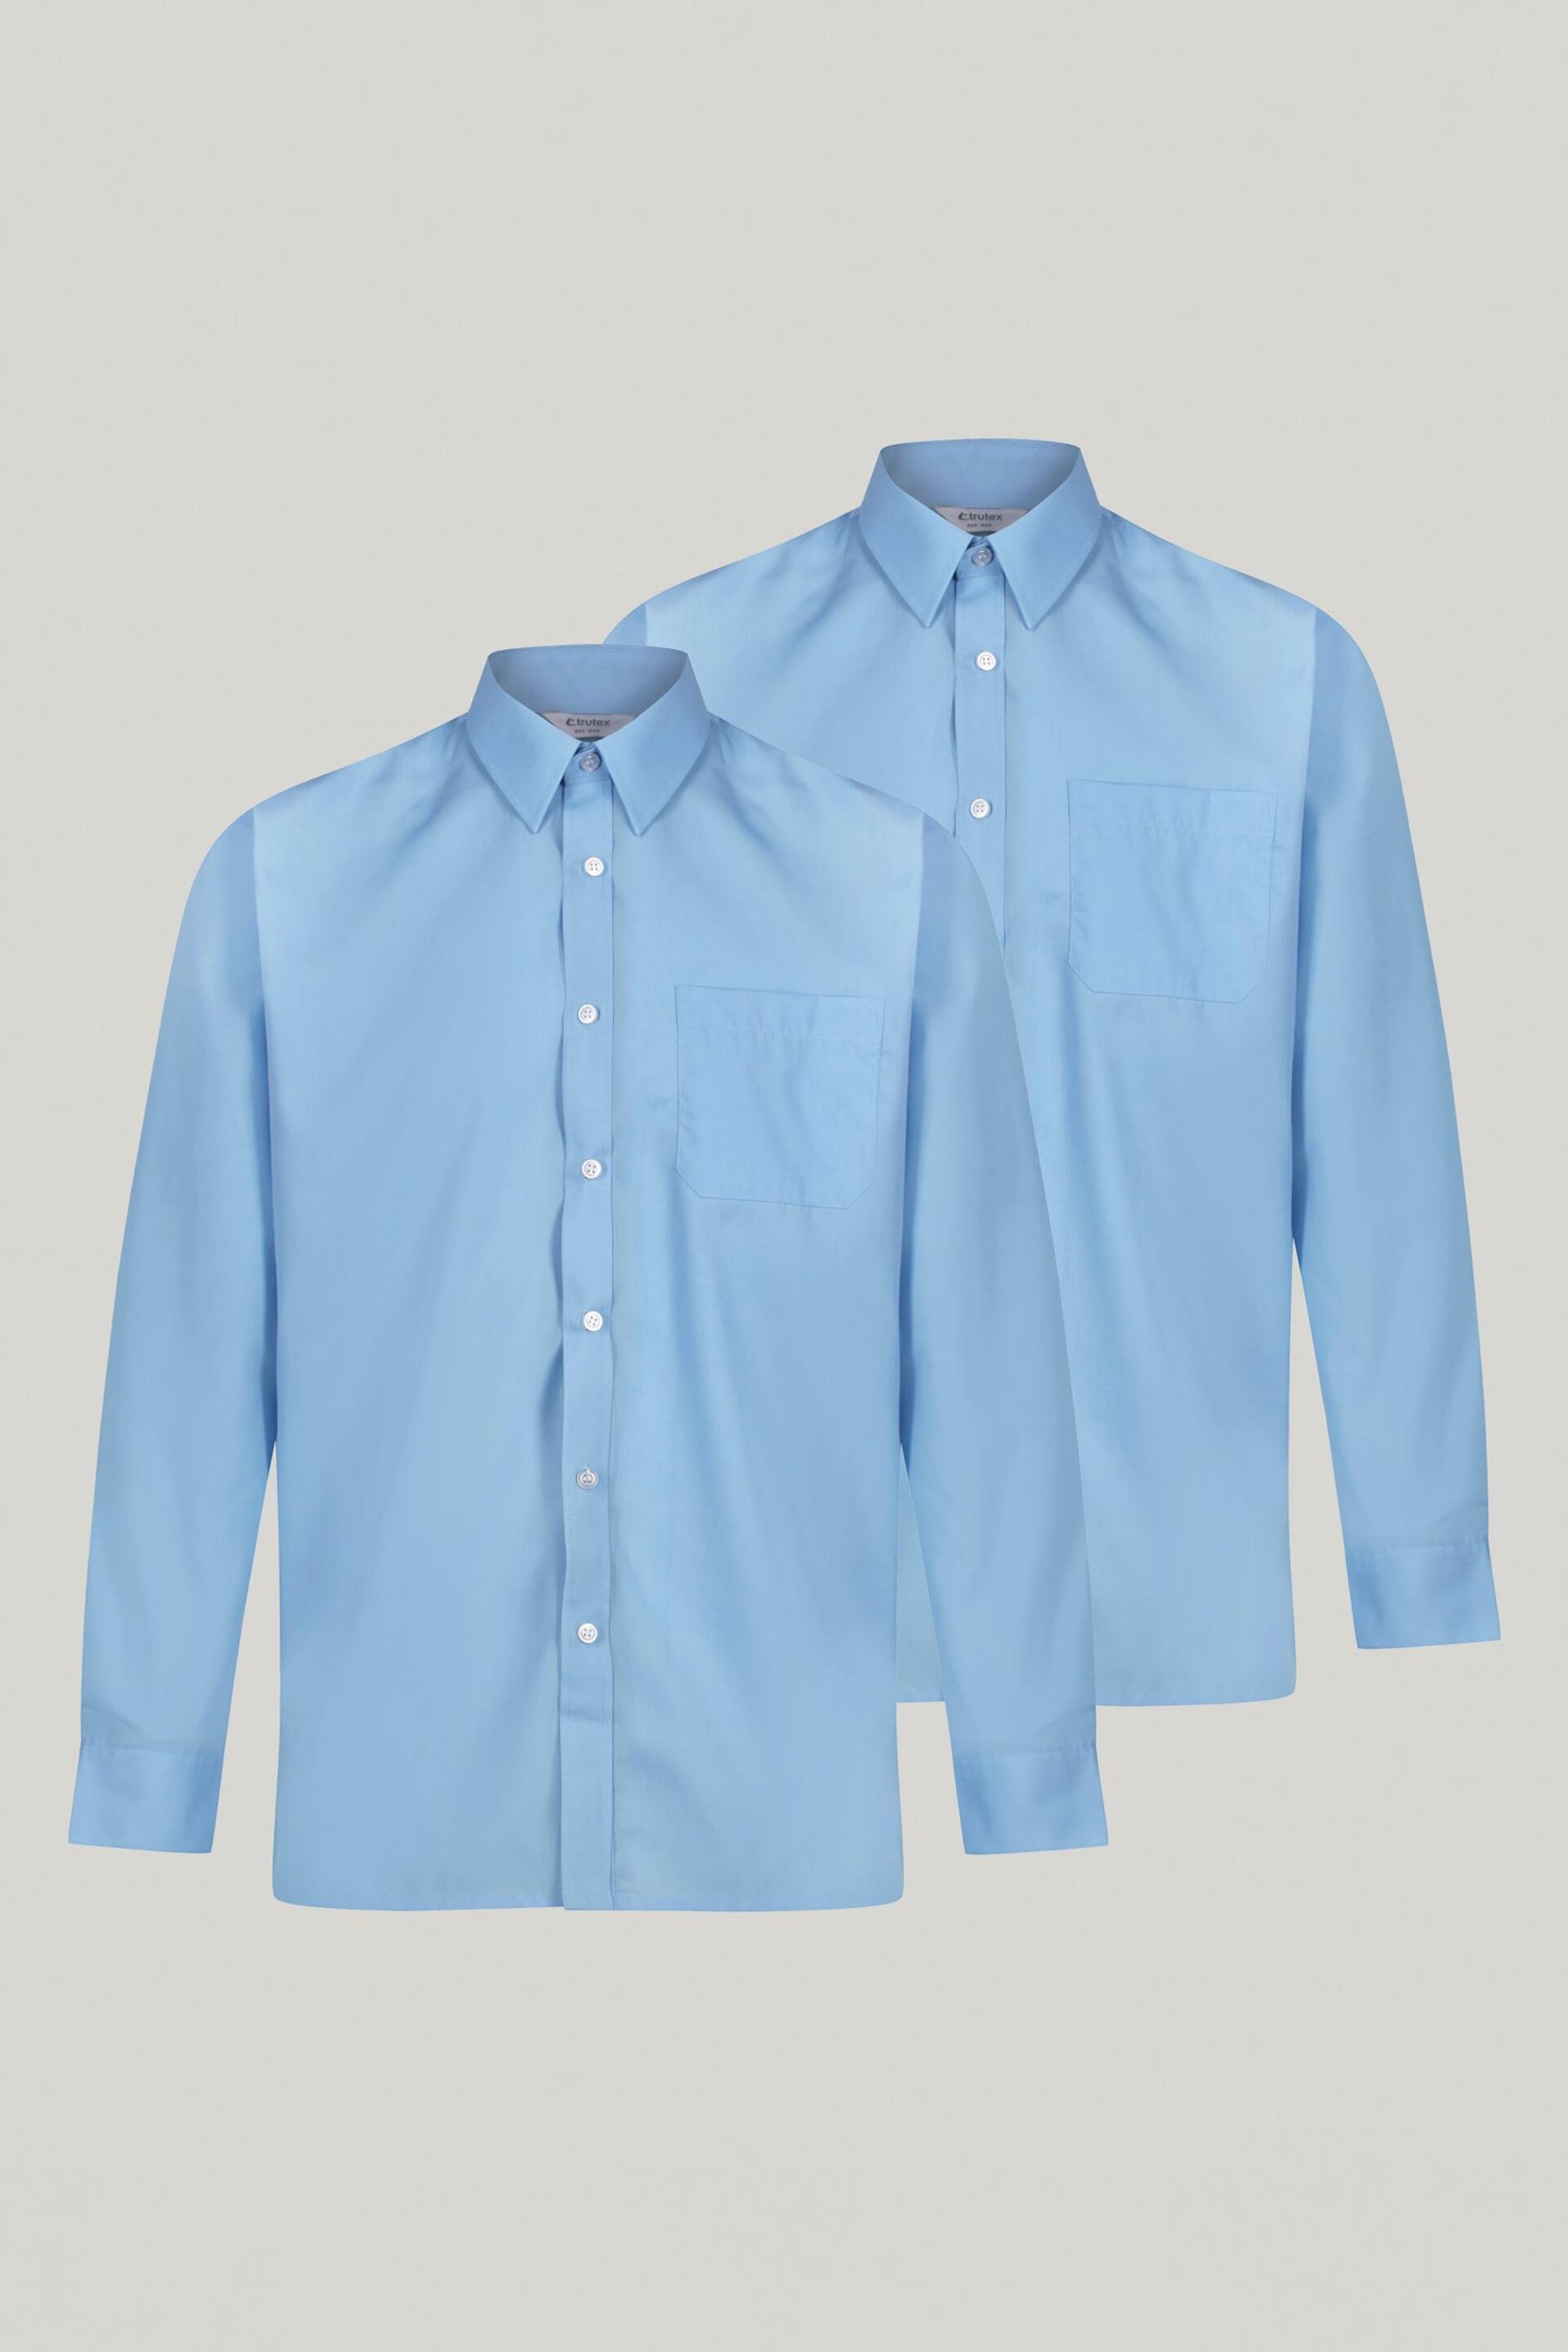 Trutex Blue Regular Fit Long Sleeve 2 Pack School Shirts - Image 1 of 7